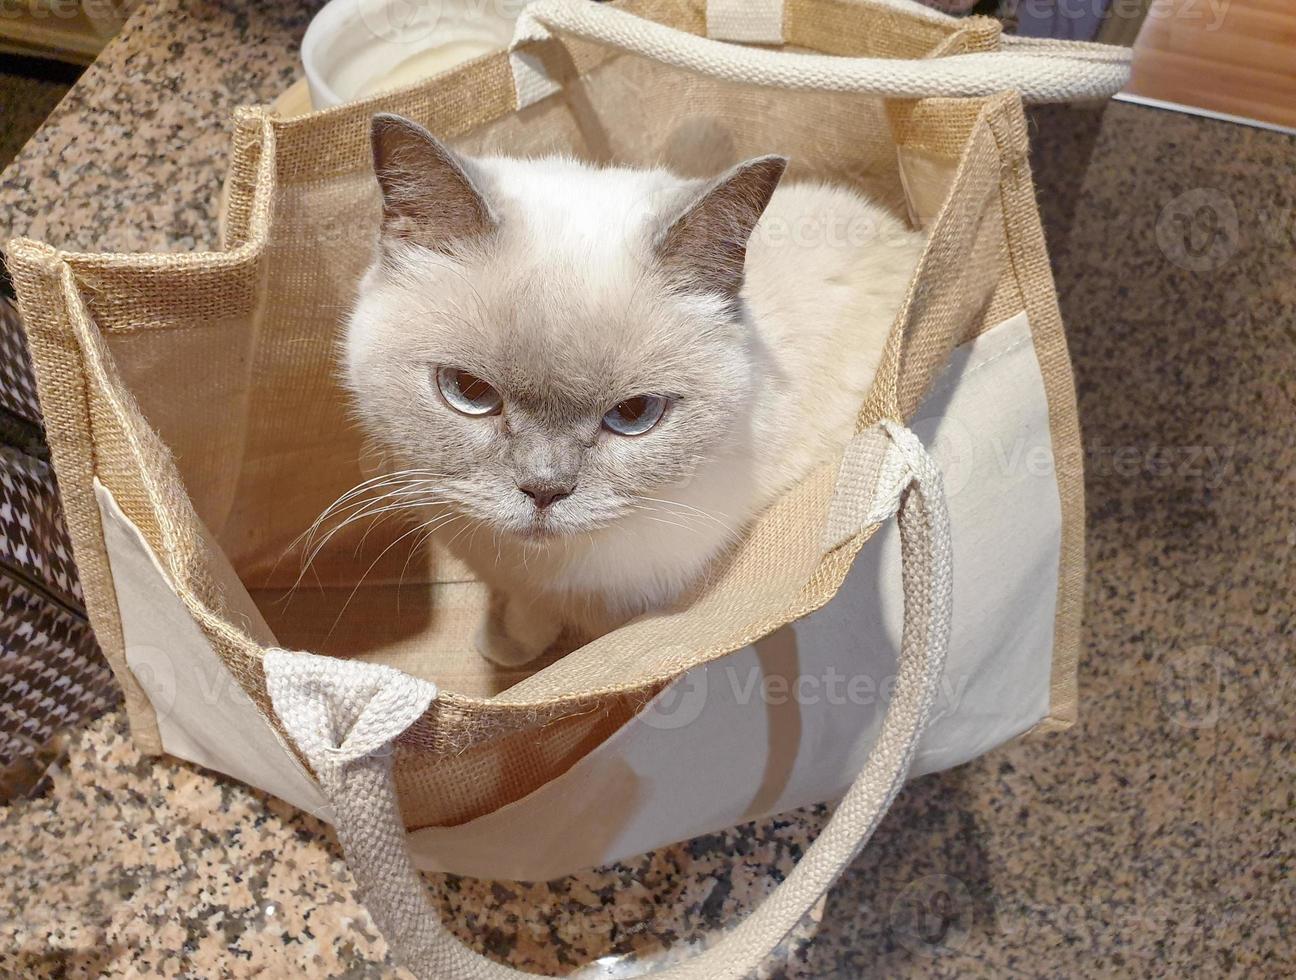 gato blanco británico de pelo corto sentado dentro de una bolsa de lona foto